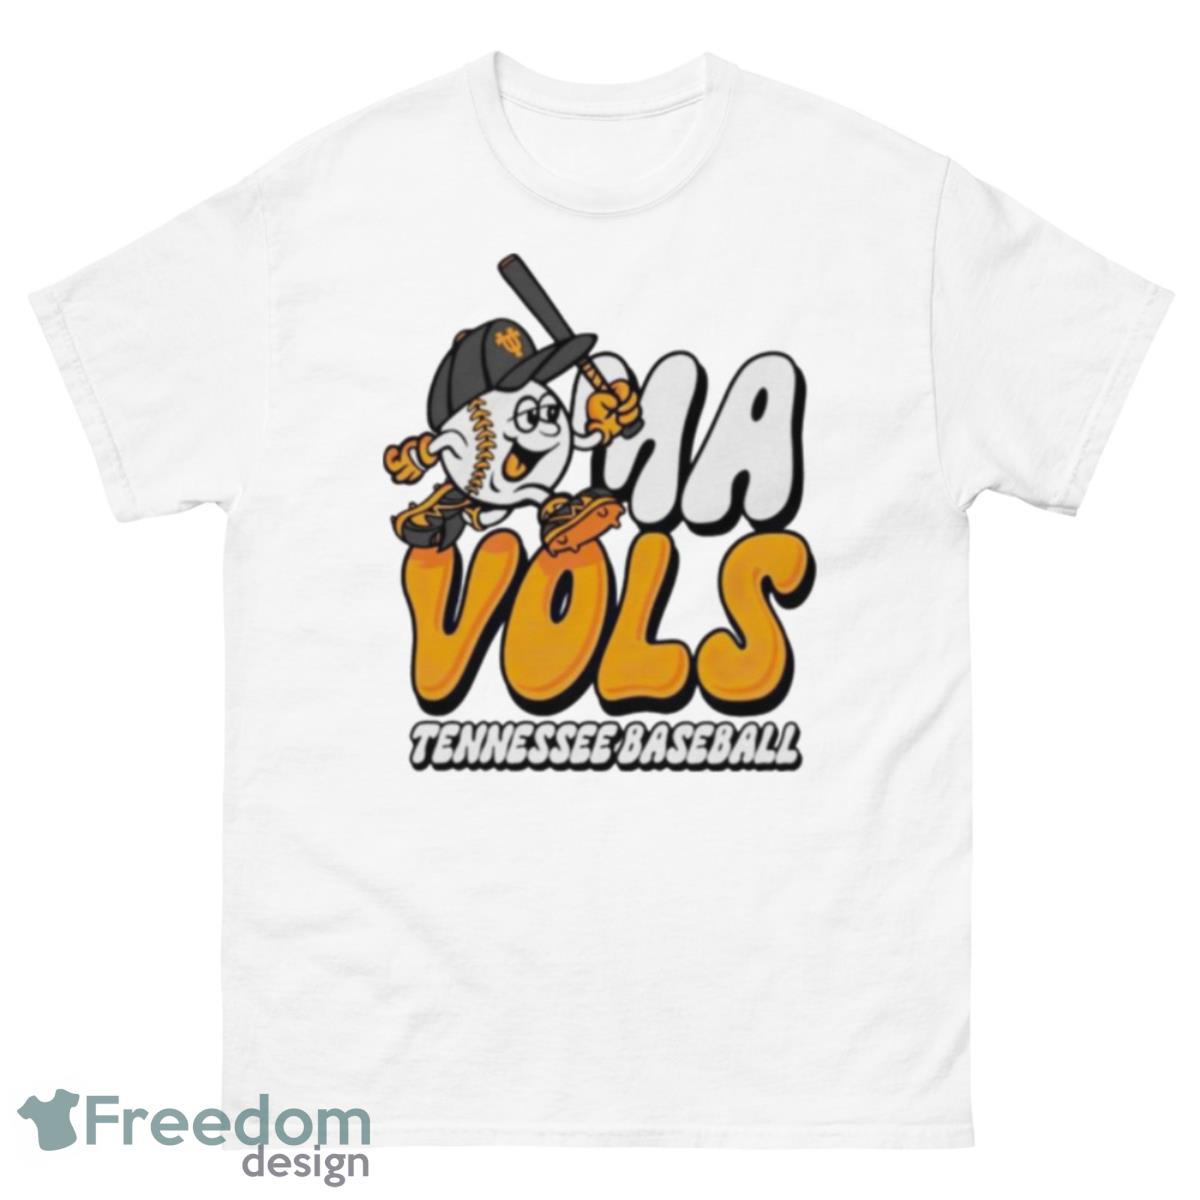 Omavols Tennessee Baseball Shirt - Freedomdesign